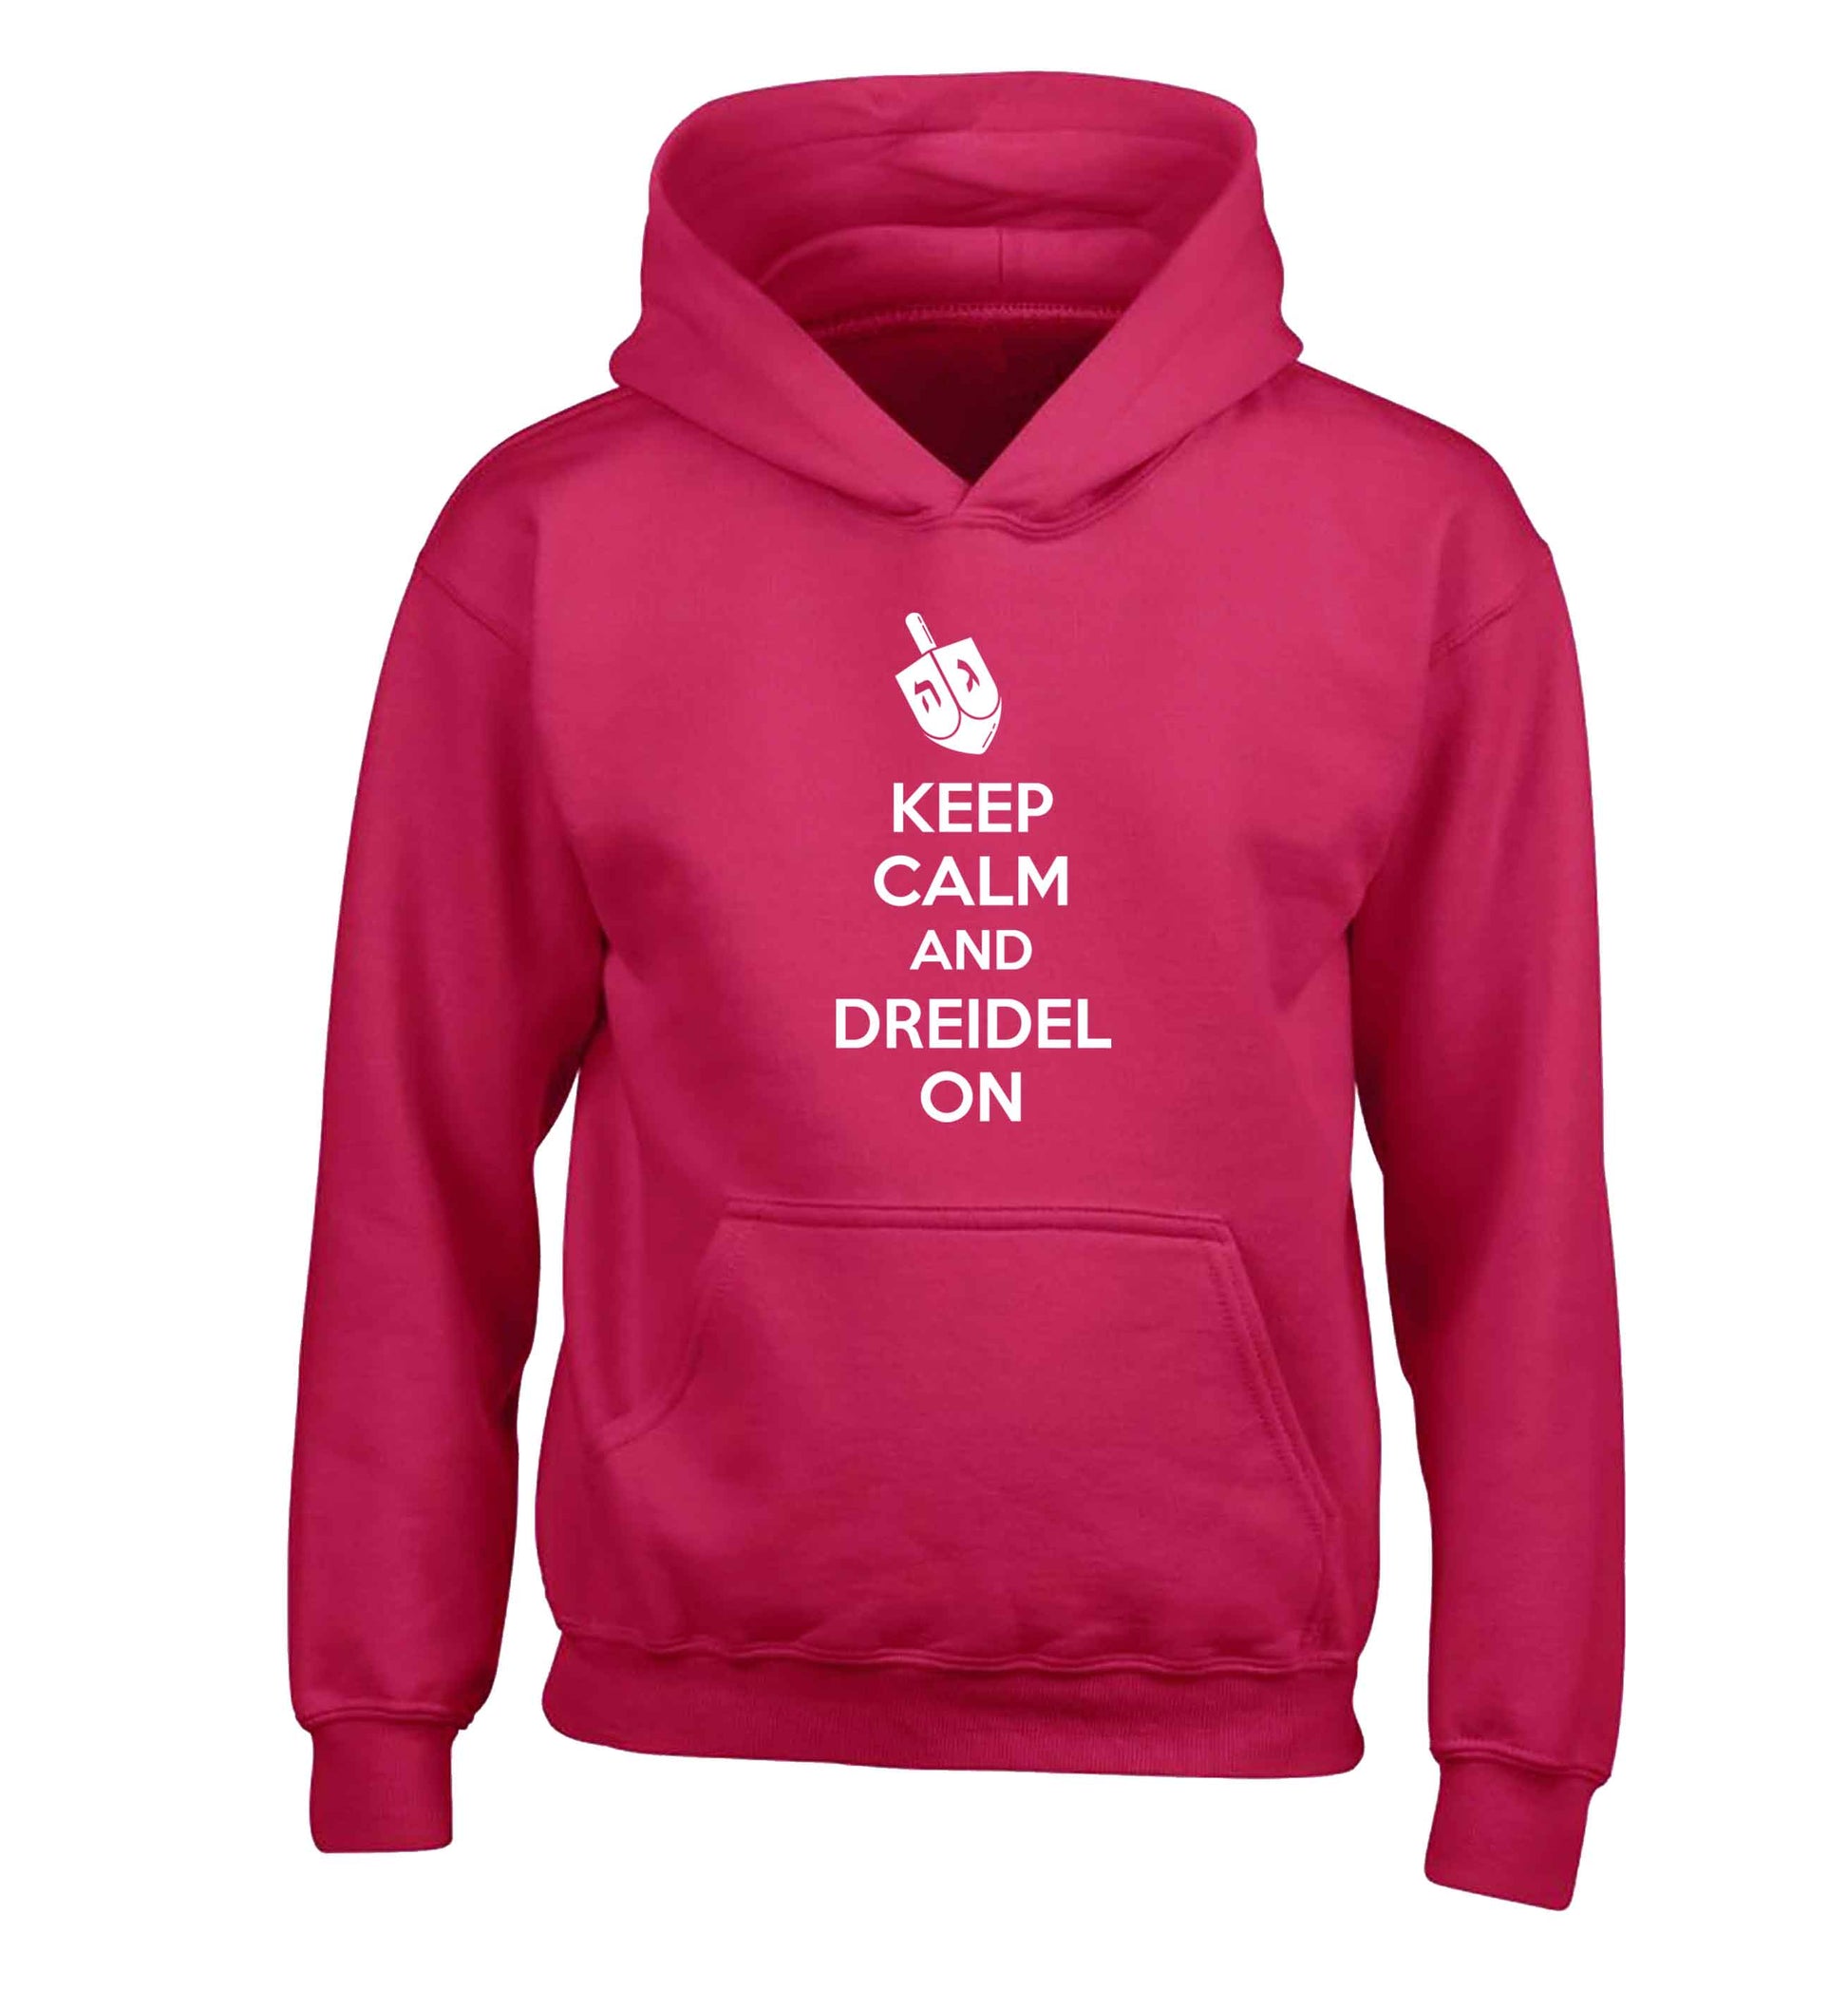 Keep calm and dreidel on children's pink hoodie 12-13 Years